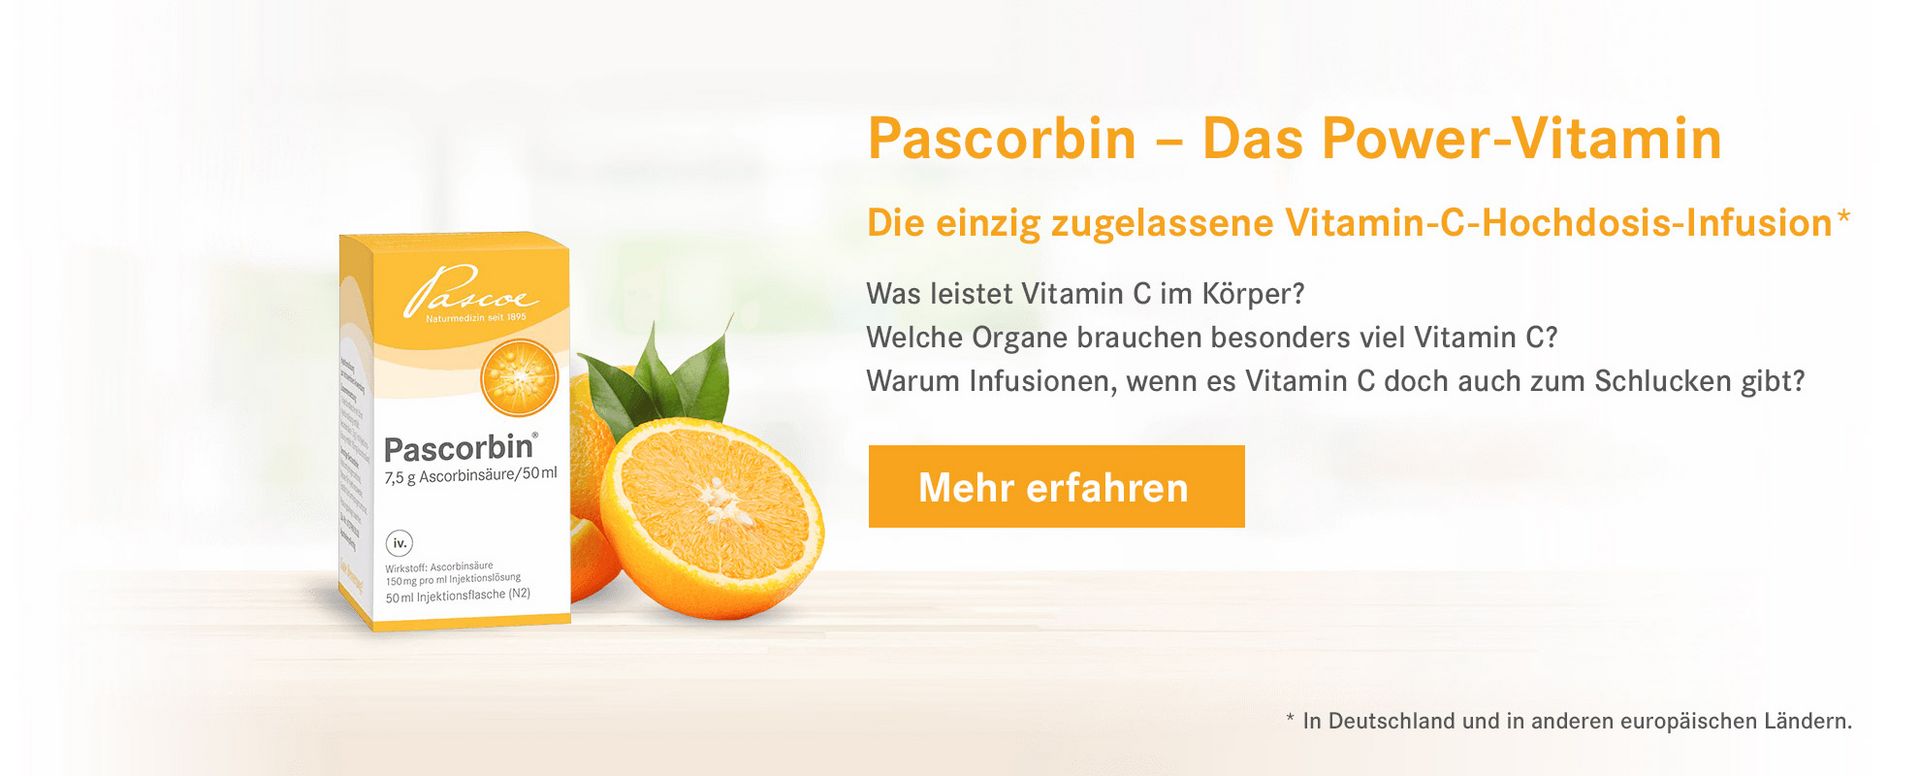 Pascorbin - Vitamin C Hochdosis-Infusion von Pascoe Naturmedizin